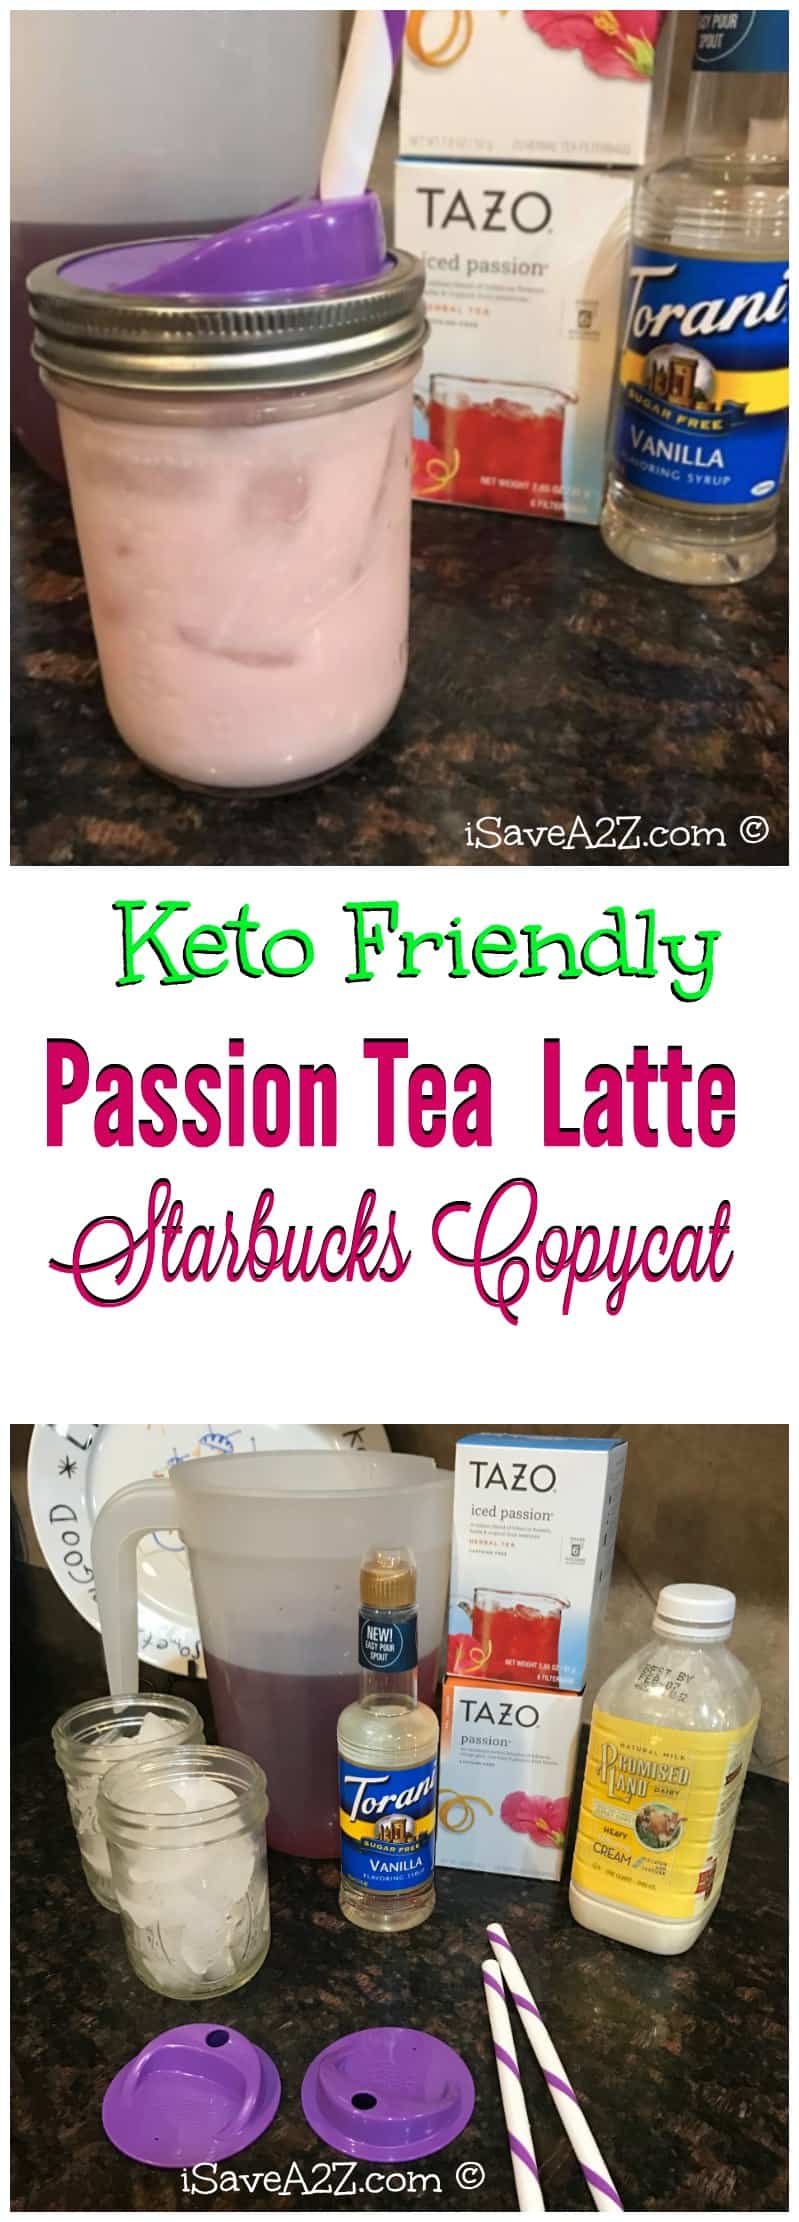 Sugar Free Passion Tea Latte Starbucks Copycat Recipe (Keto Friendly)